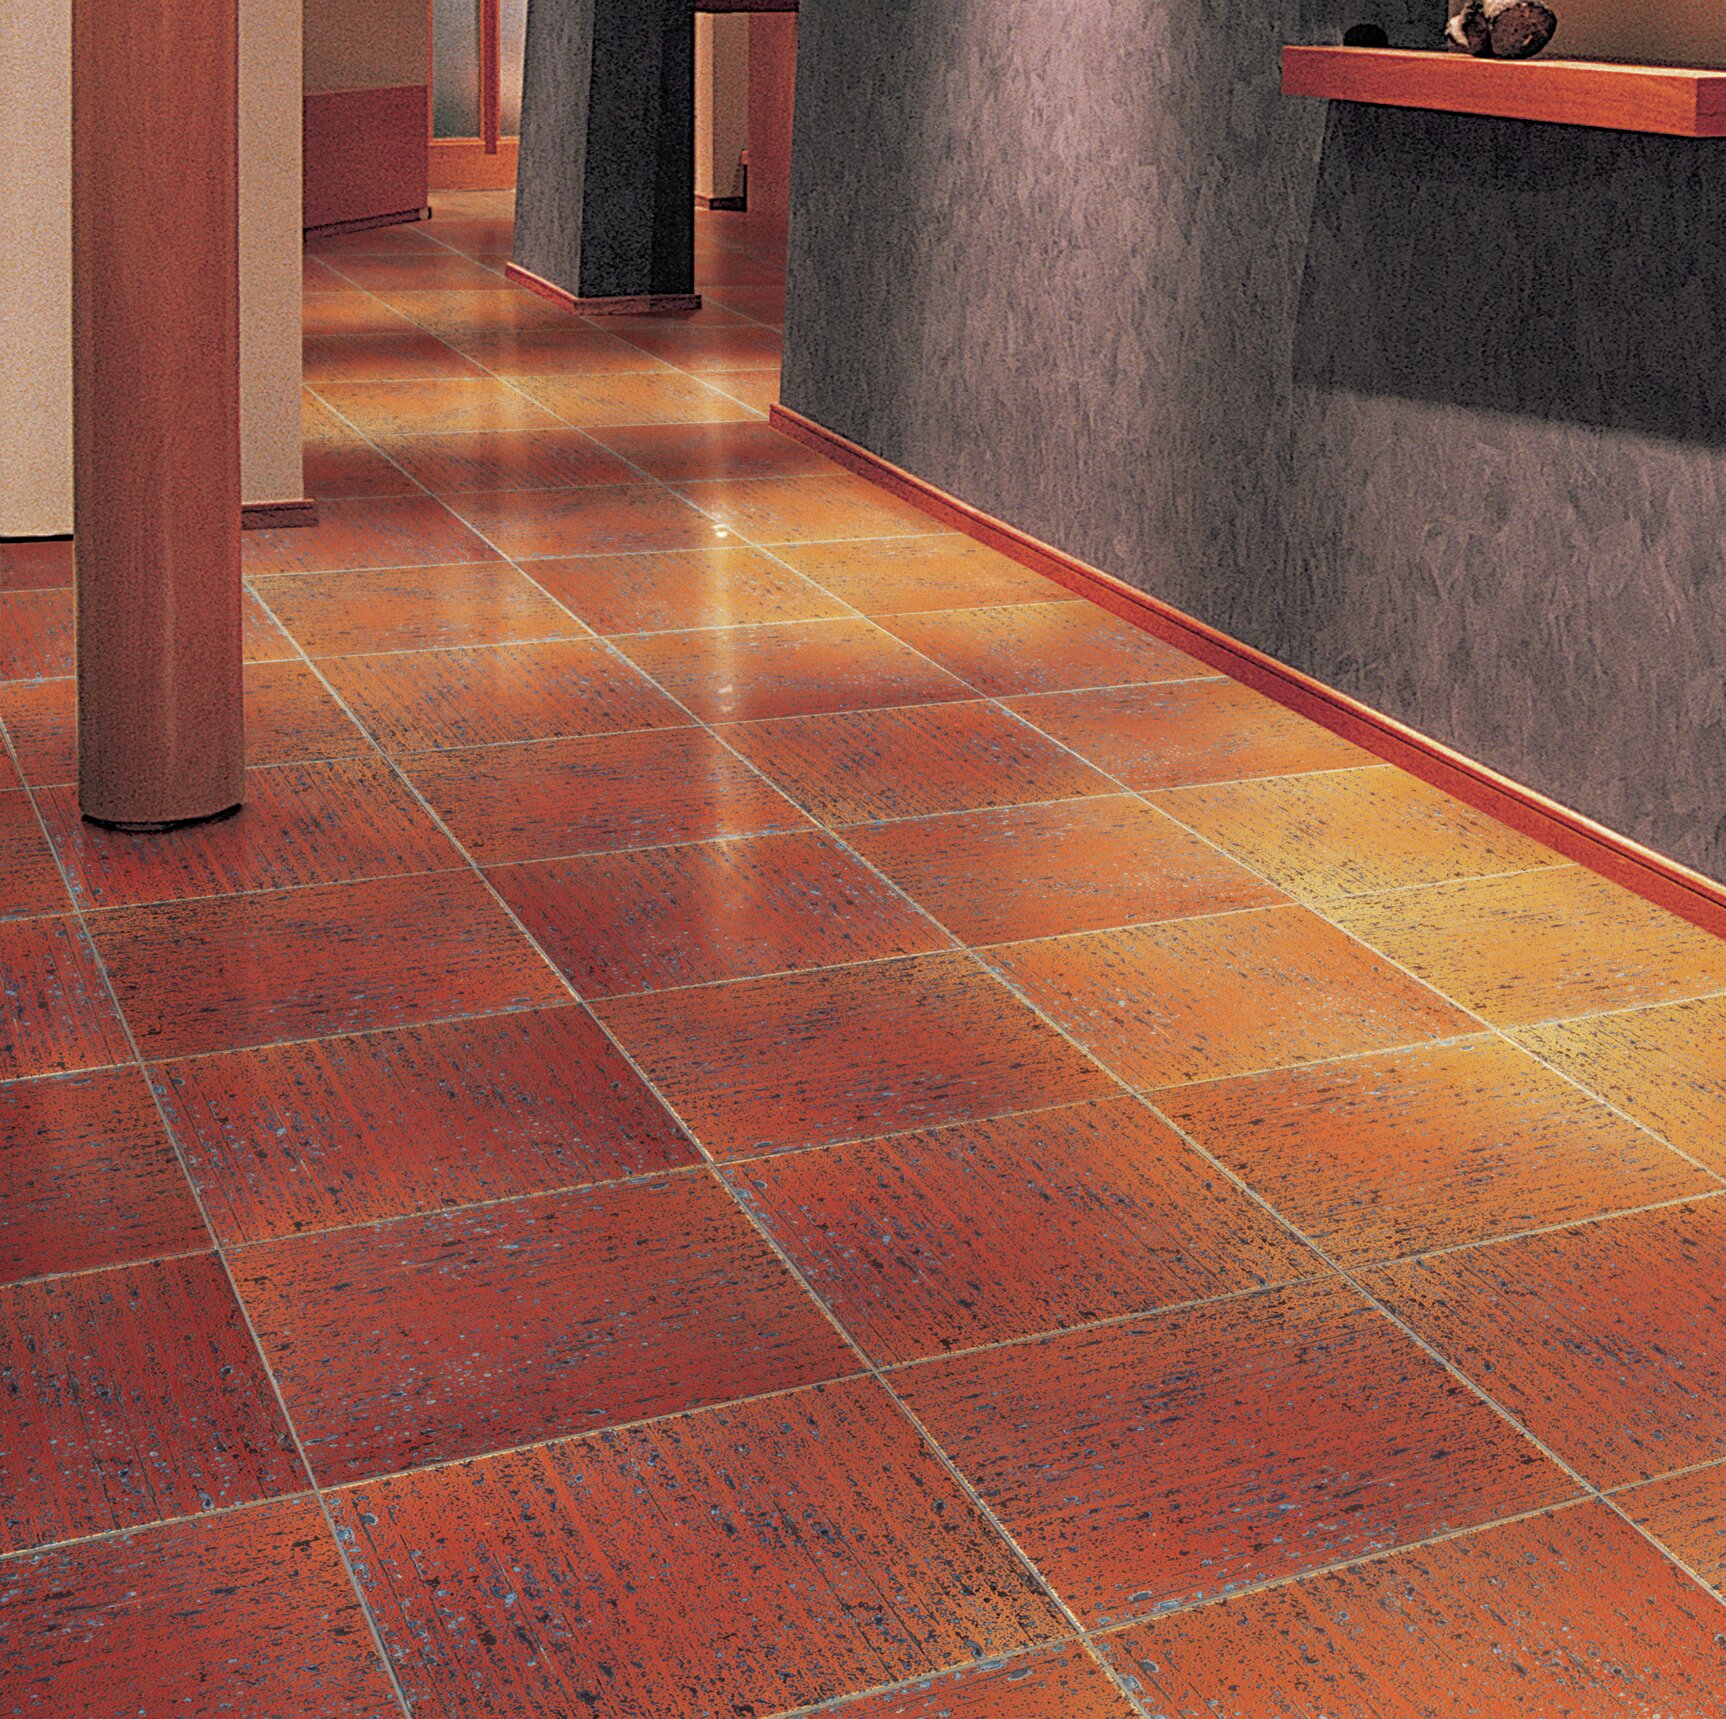 Imagine Tile Inc Metro 16 X 16 Ceramic Field Tile In Rust